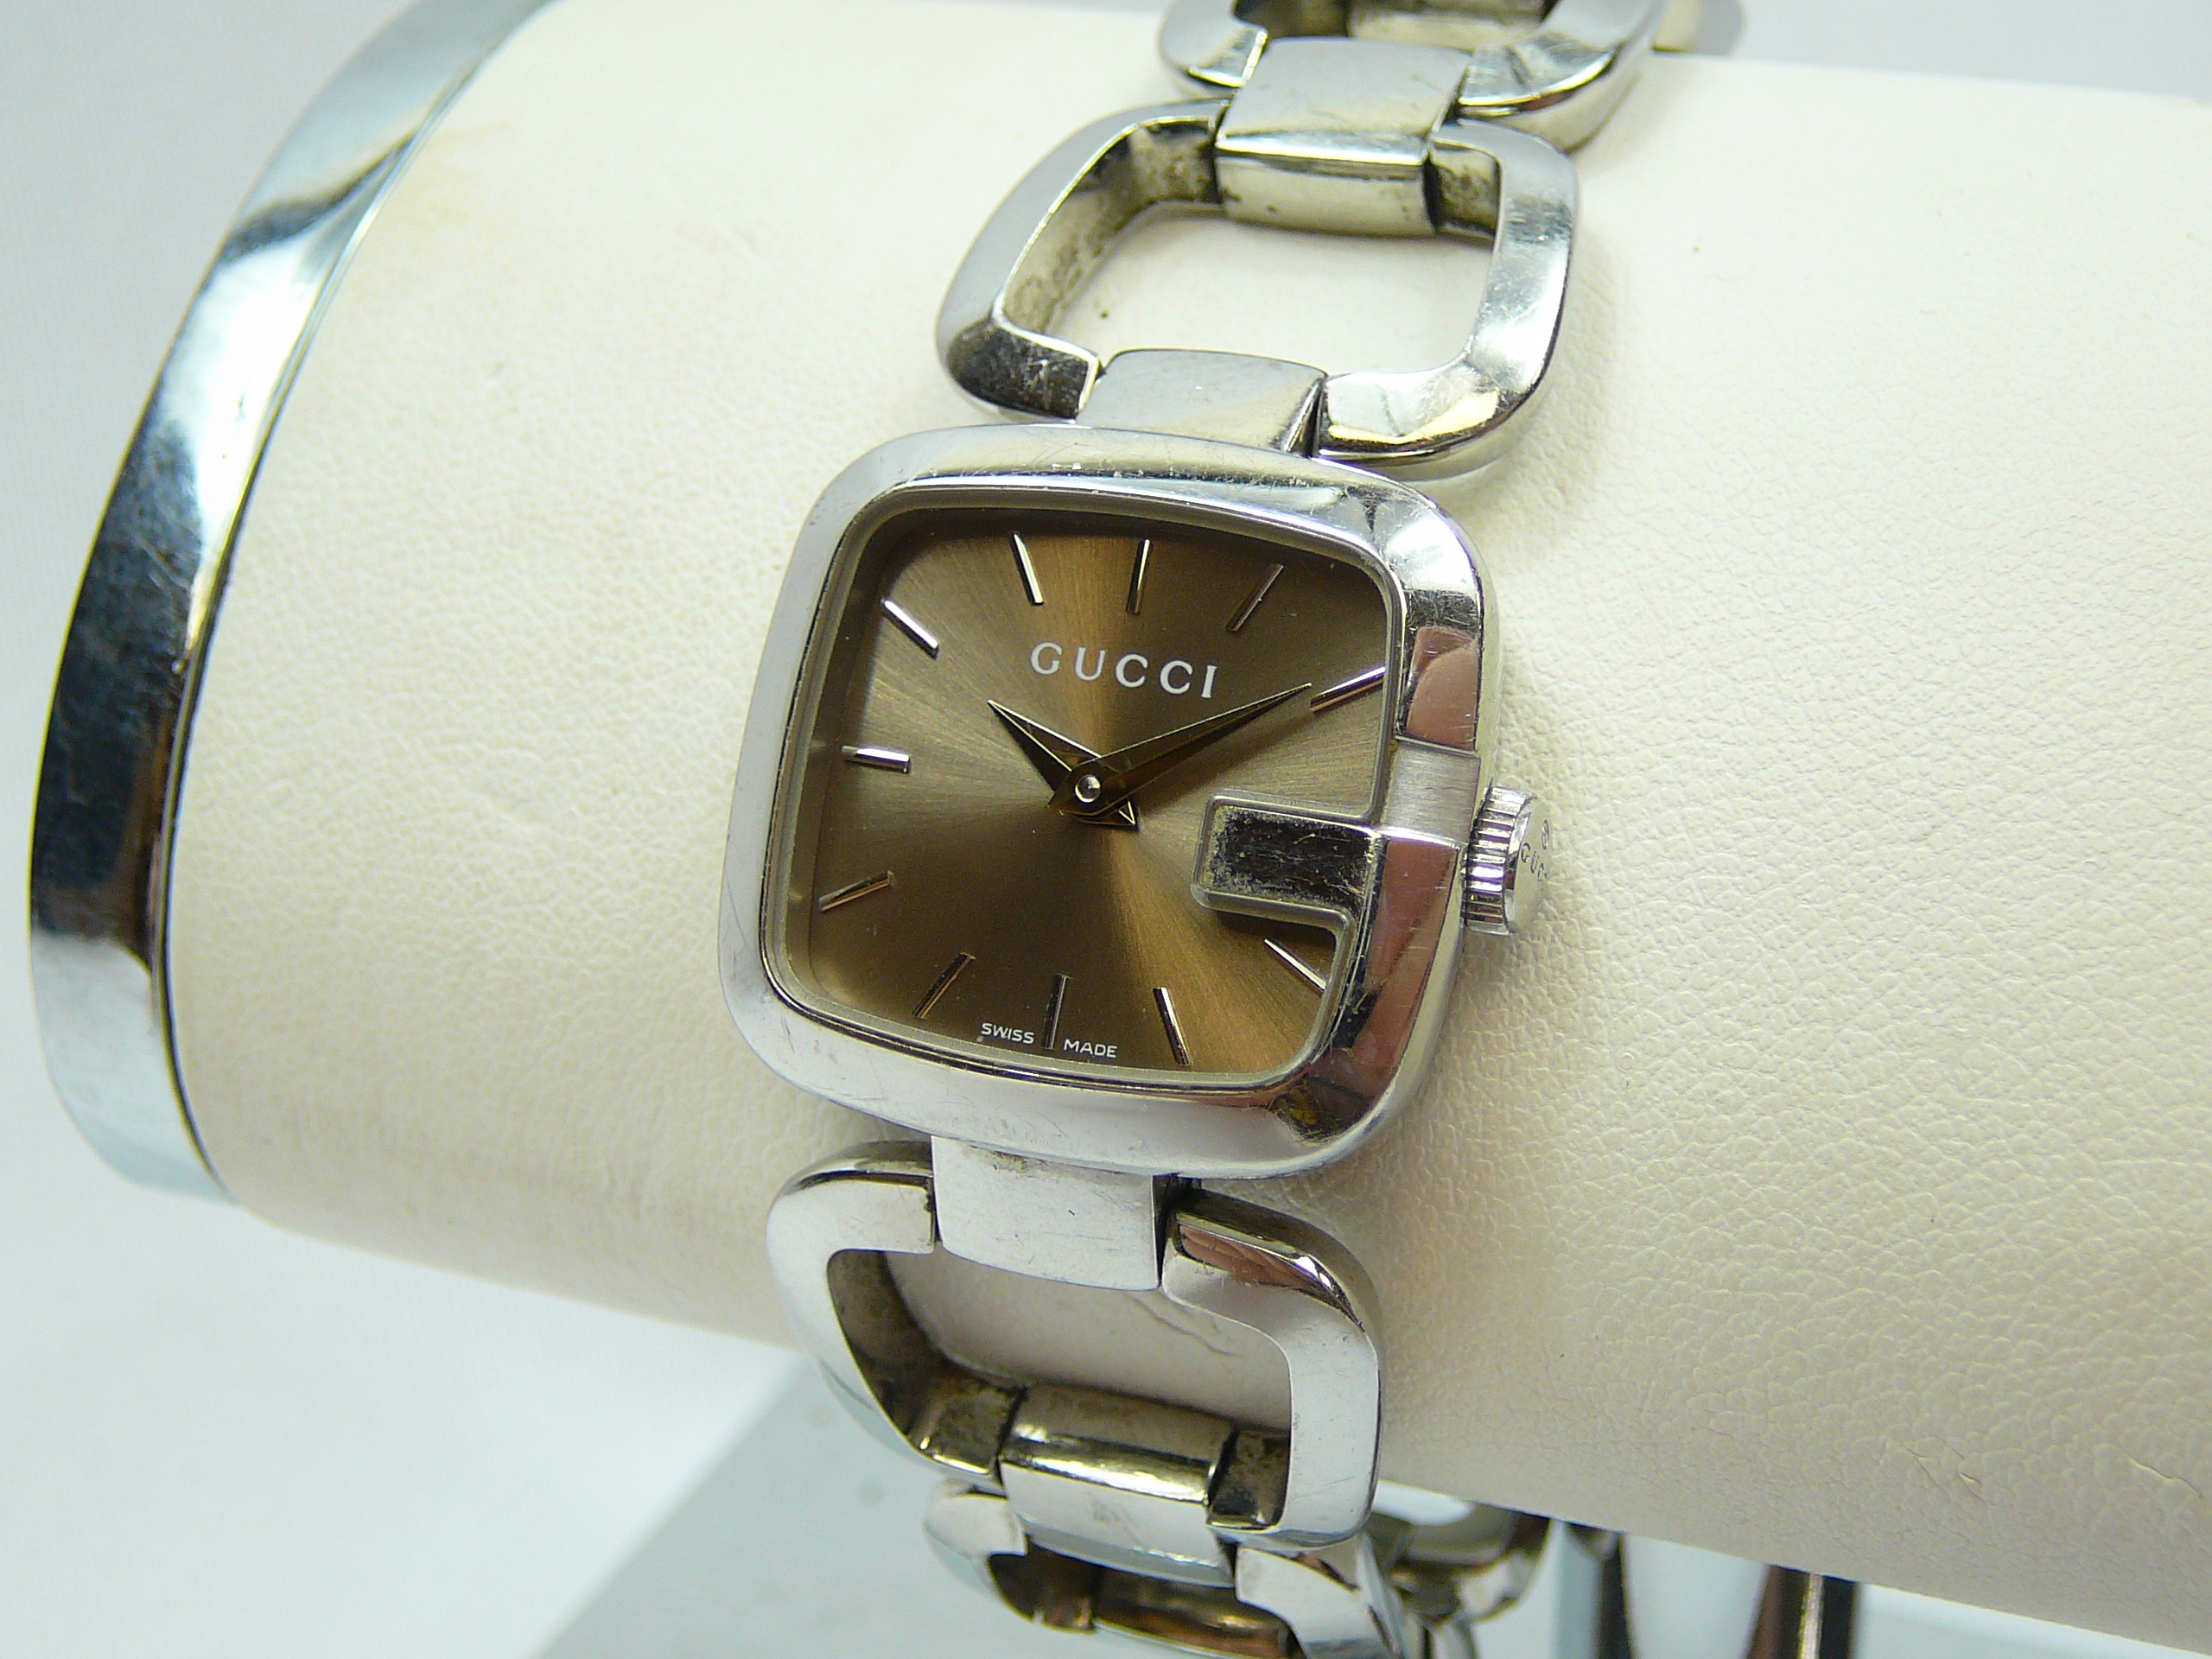 Ladies Gucci Wrist Watch - Image 2 of 3